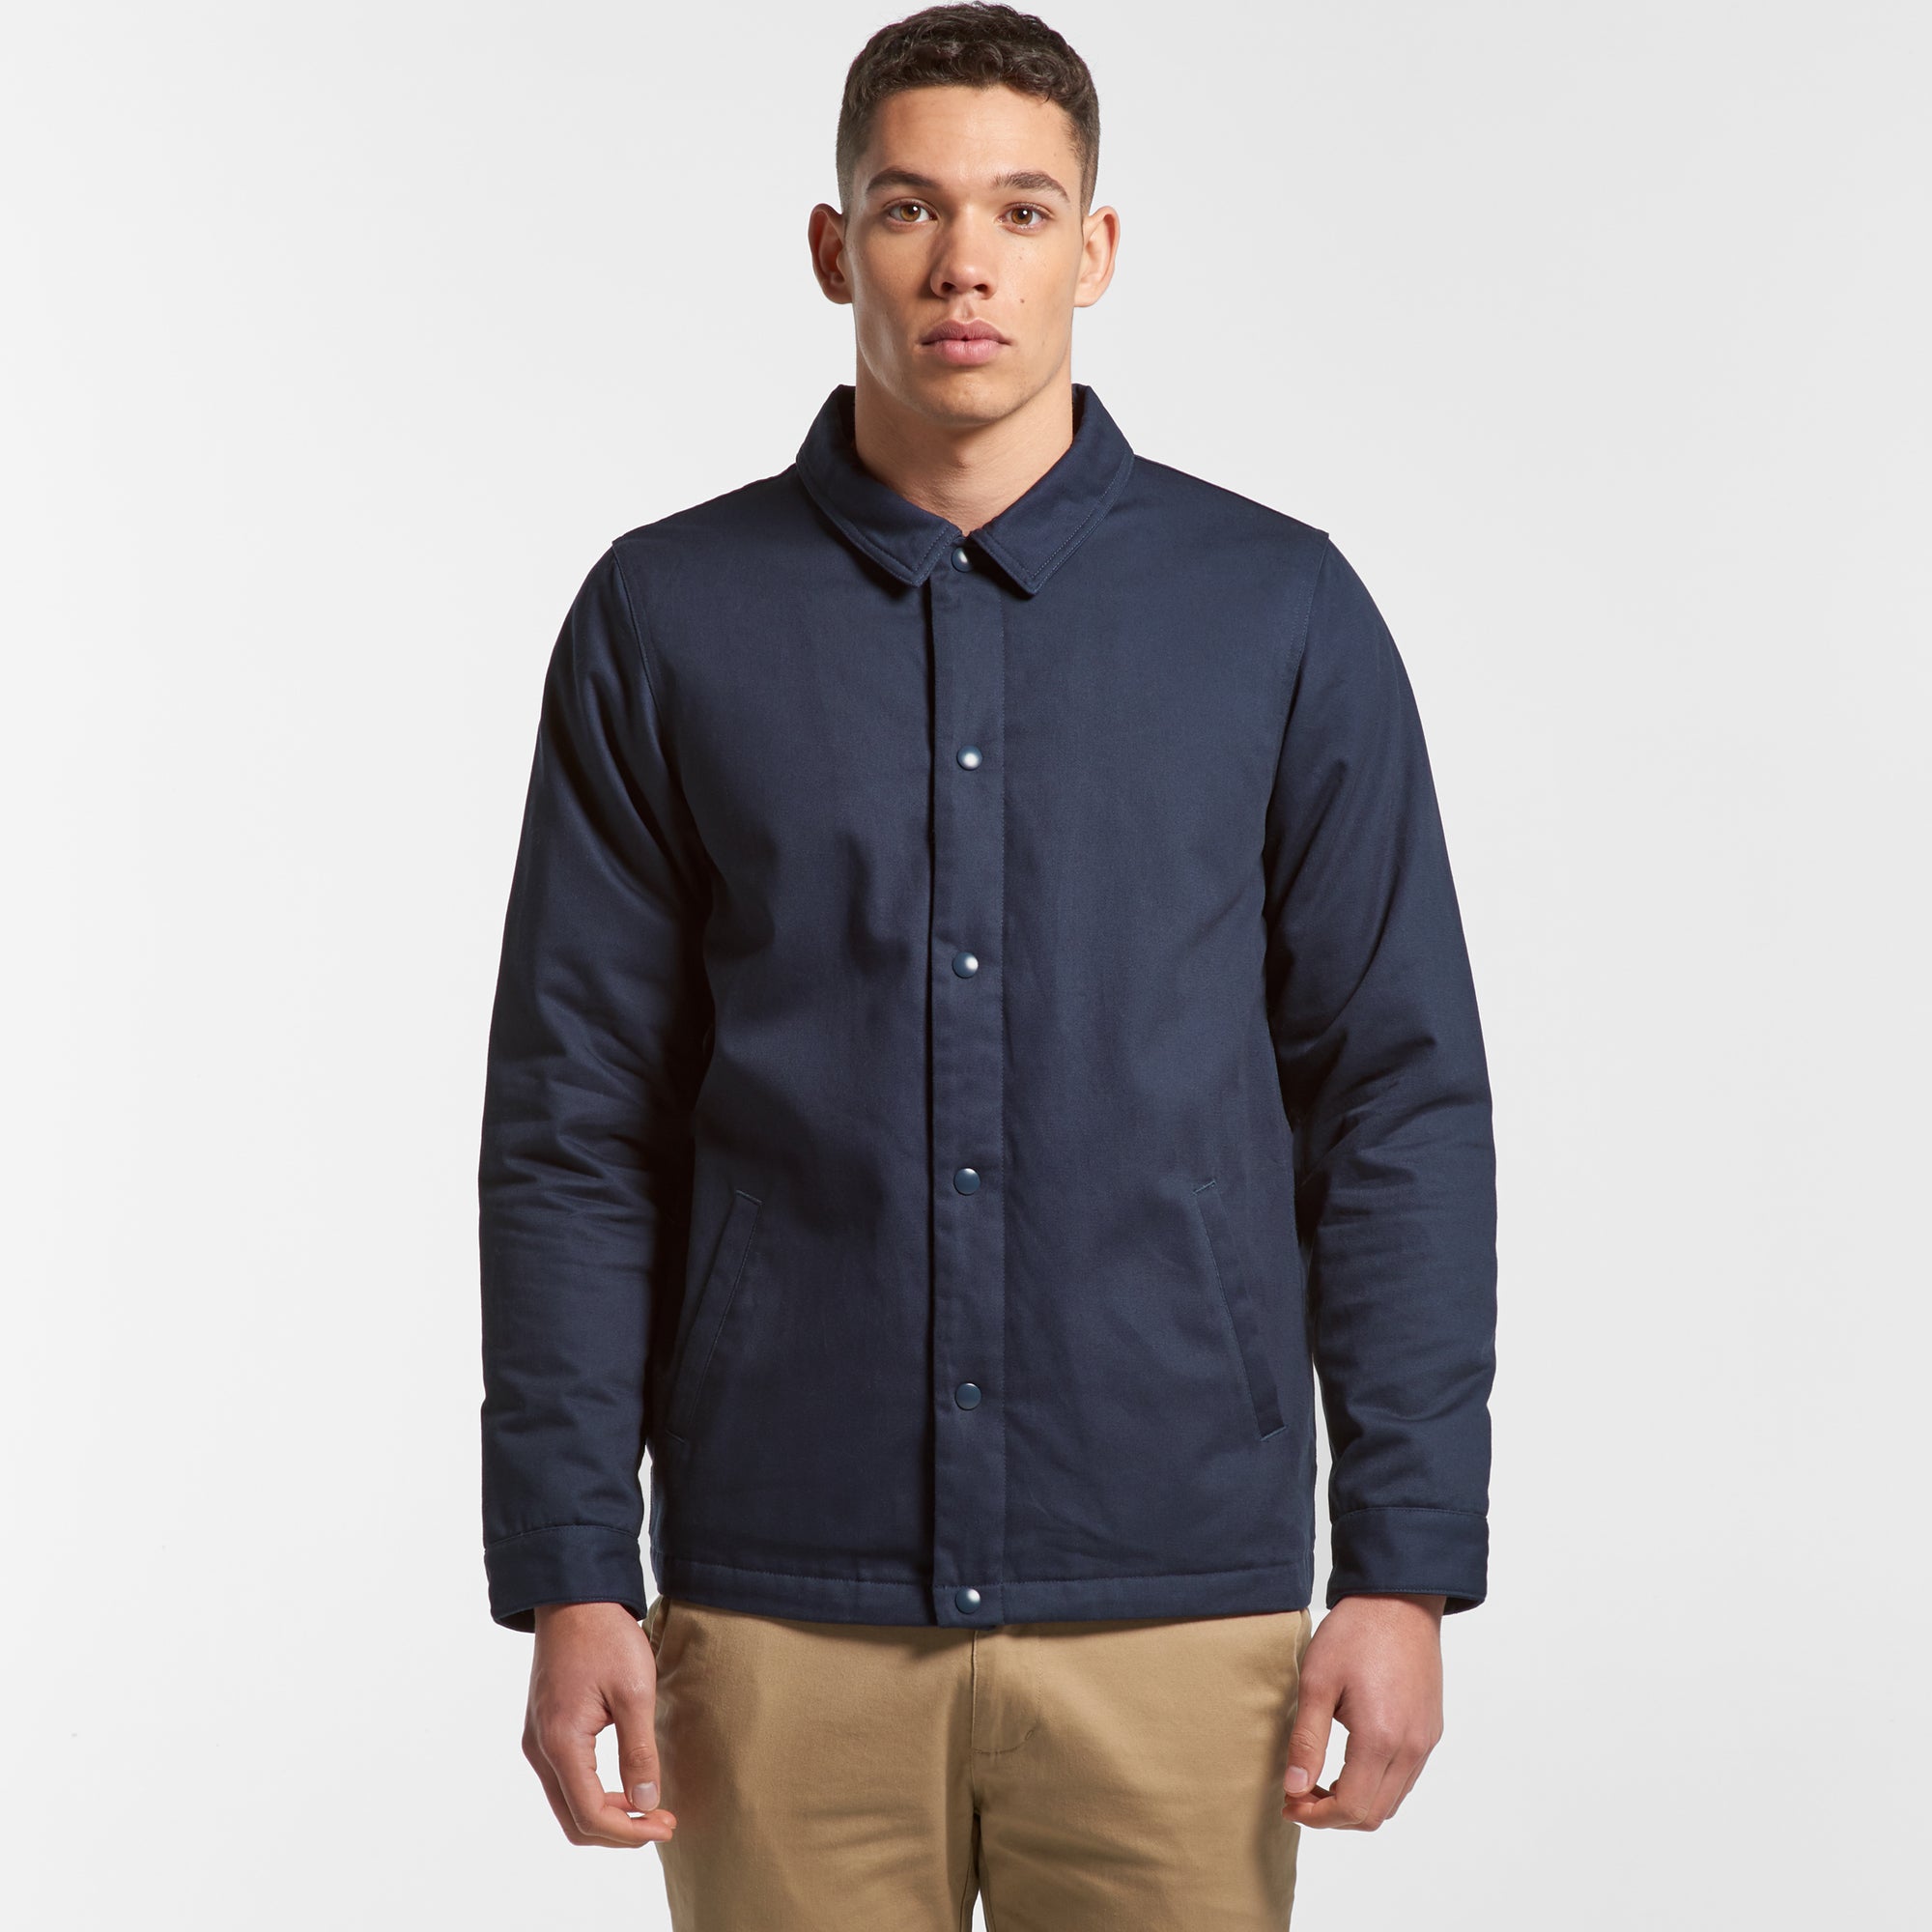 AS Colour | Men's Work Jacket - Custom Clothing | T Shirt Printing | Embroidery | Screen Printing | Print Room NZ